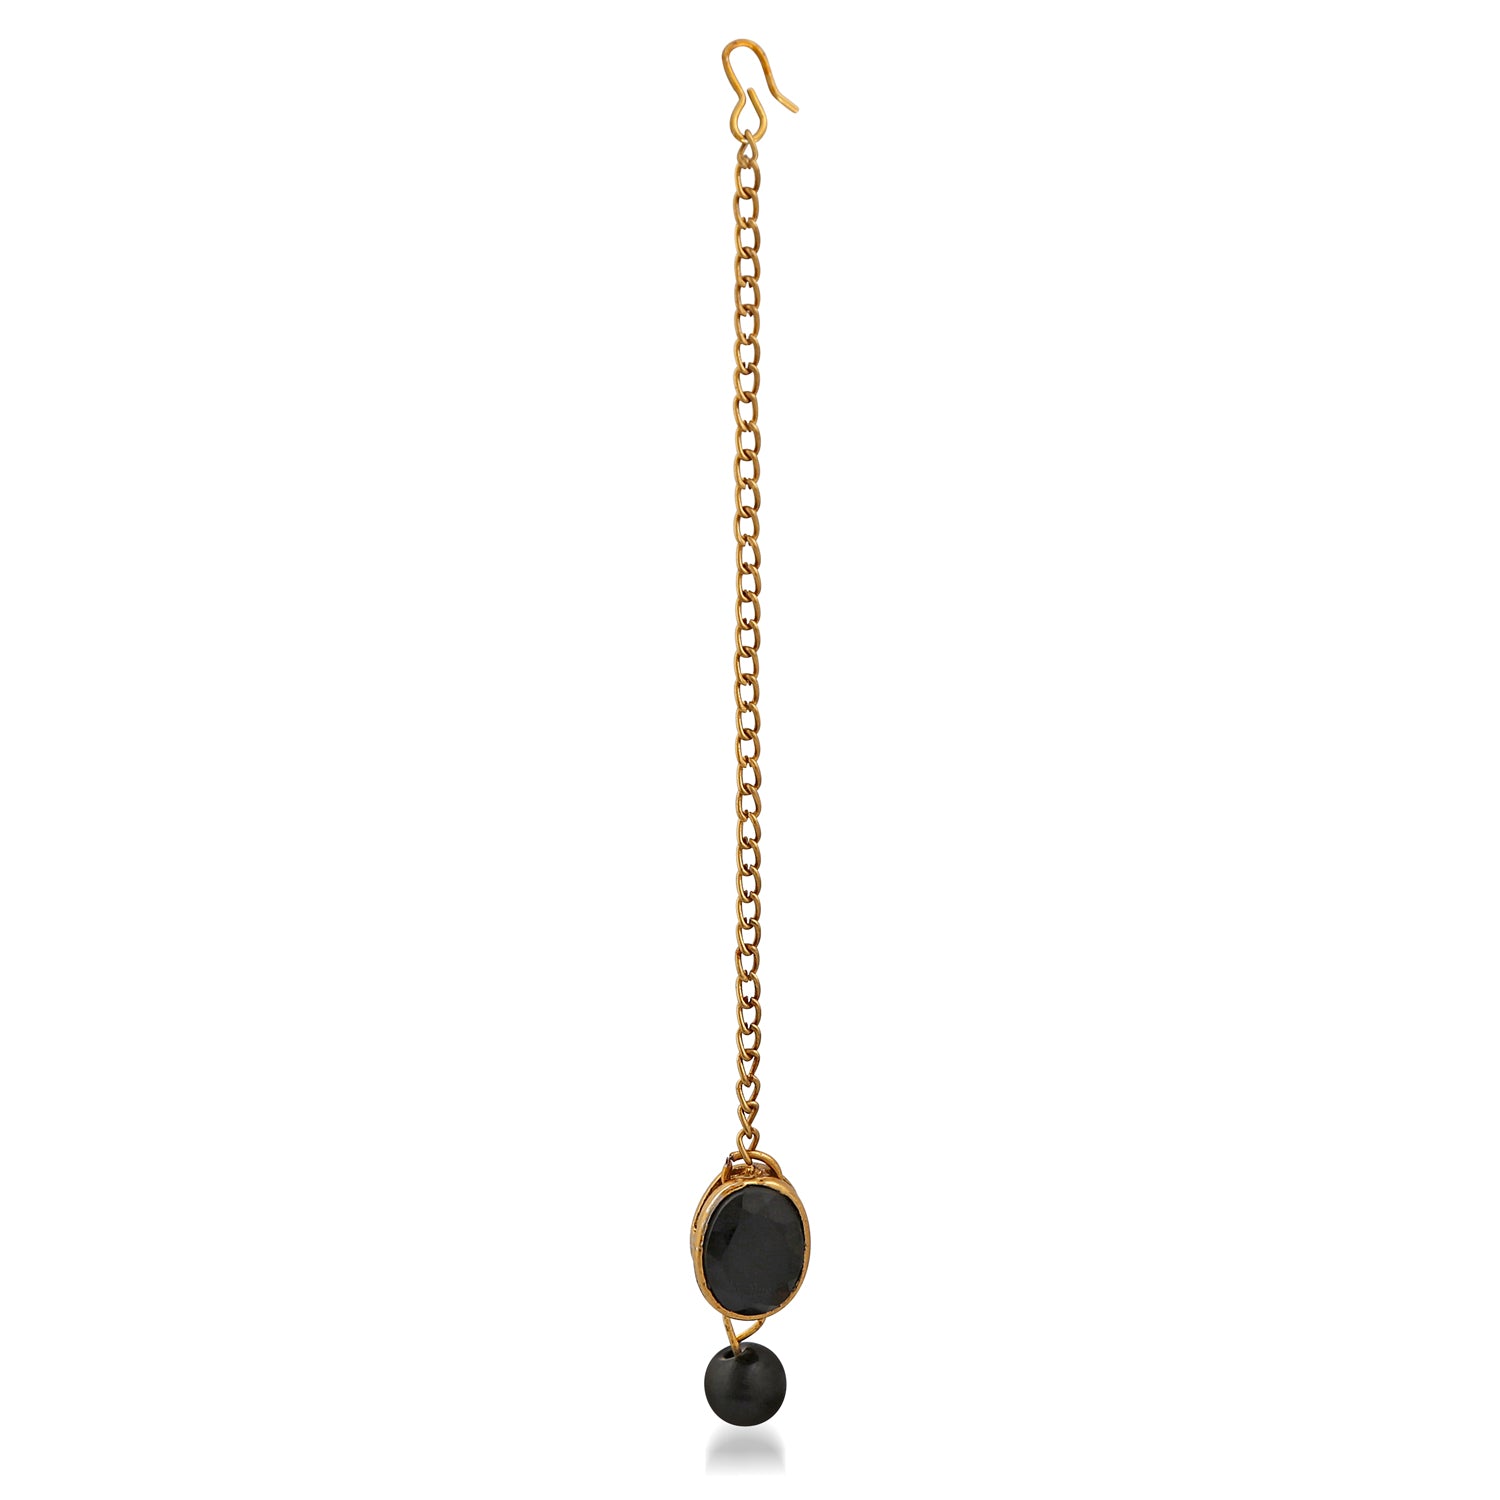 Ethnic Gold Plated Oval Shape Black Kundan Necklace set with Maang Tika and Bracelet